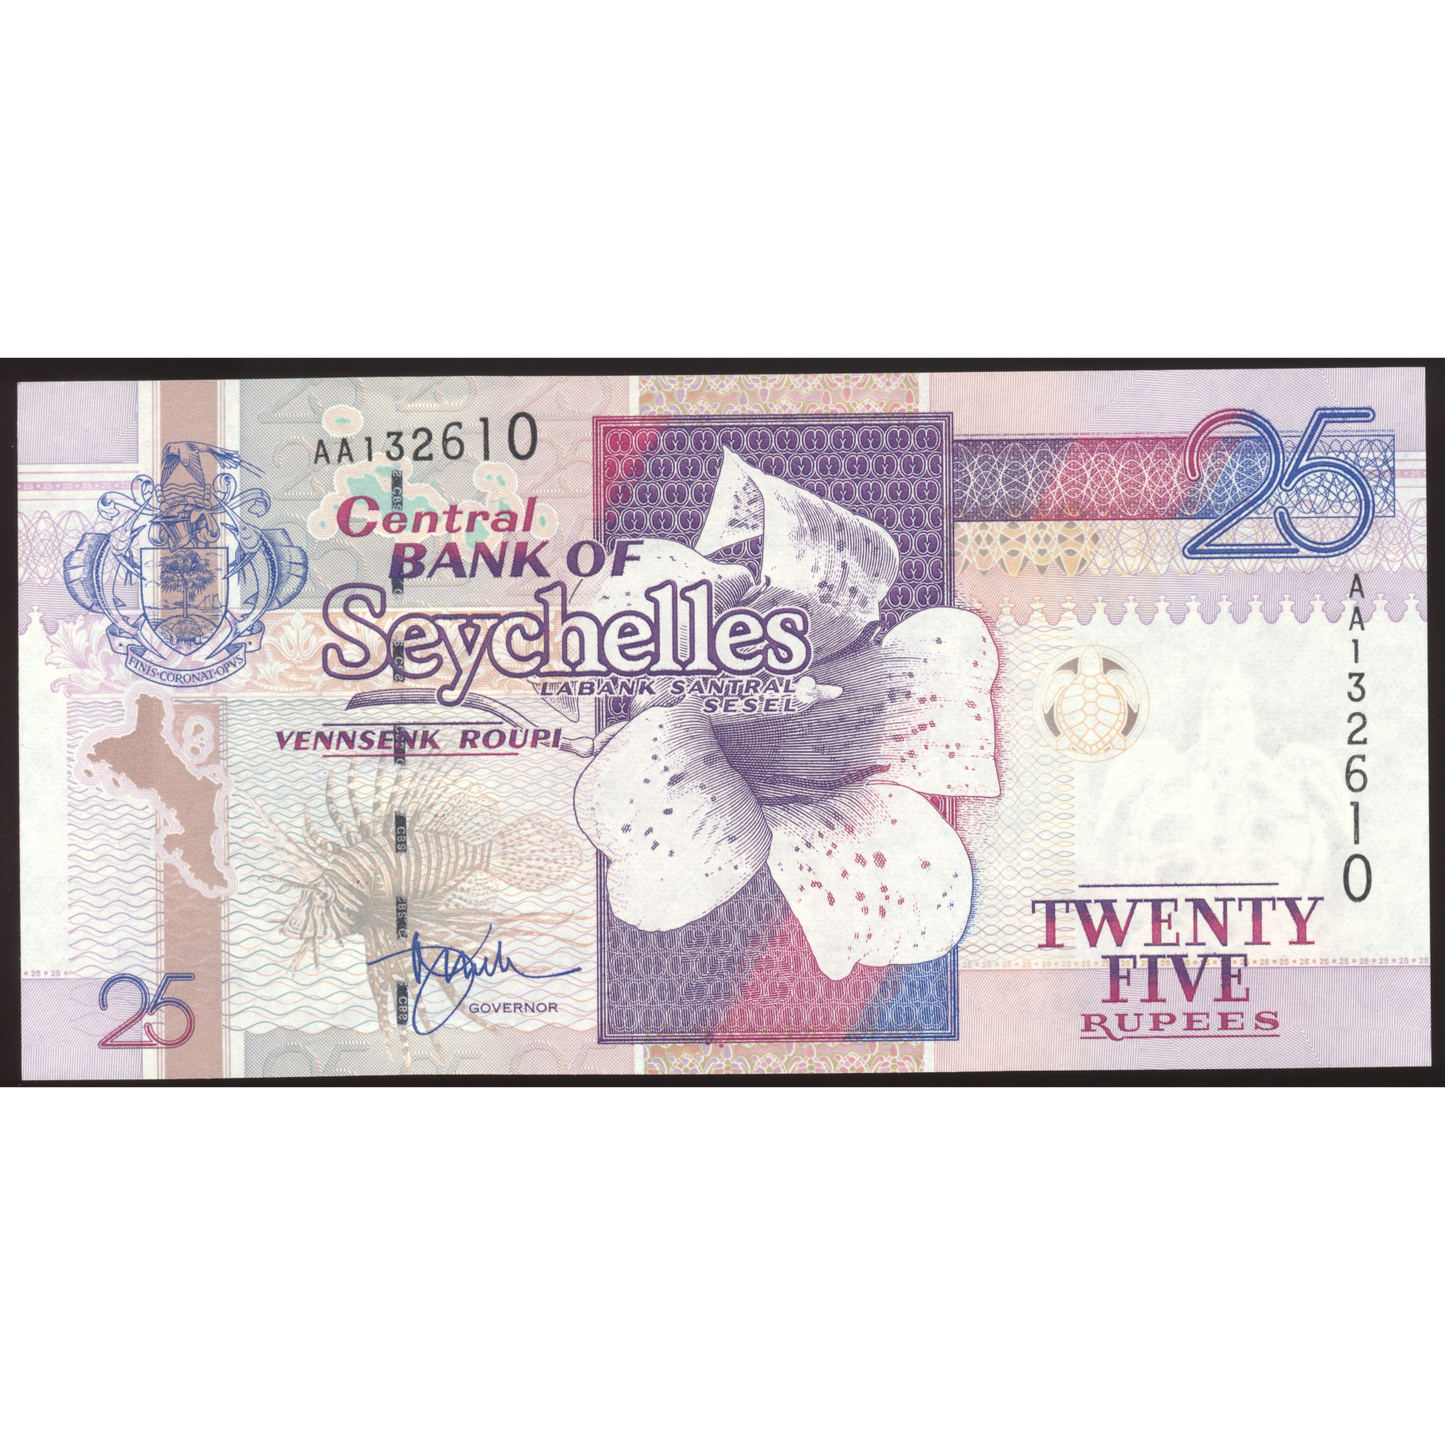 SEYCHELLES P.37a 1998-2008 25 Rupees UNC AA